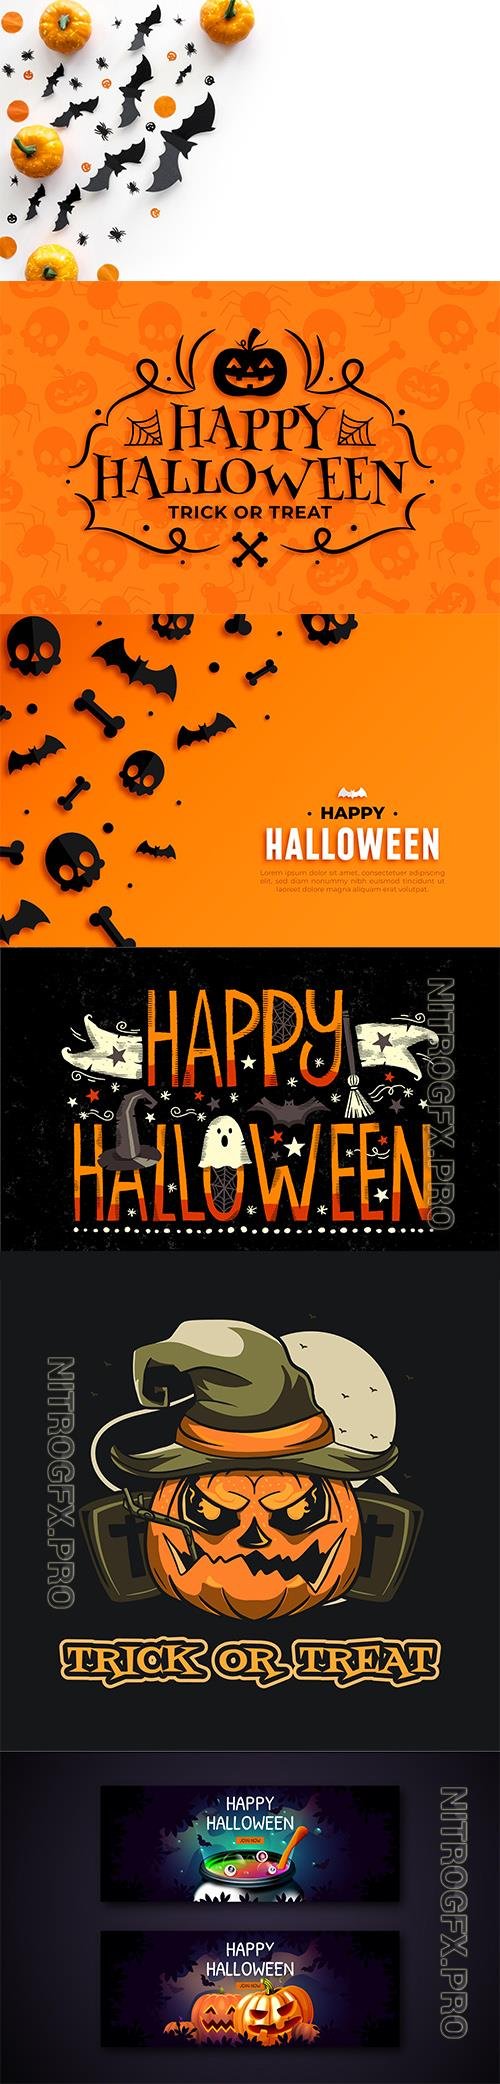 Happy halloween celebration collection vol2